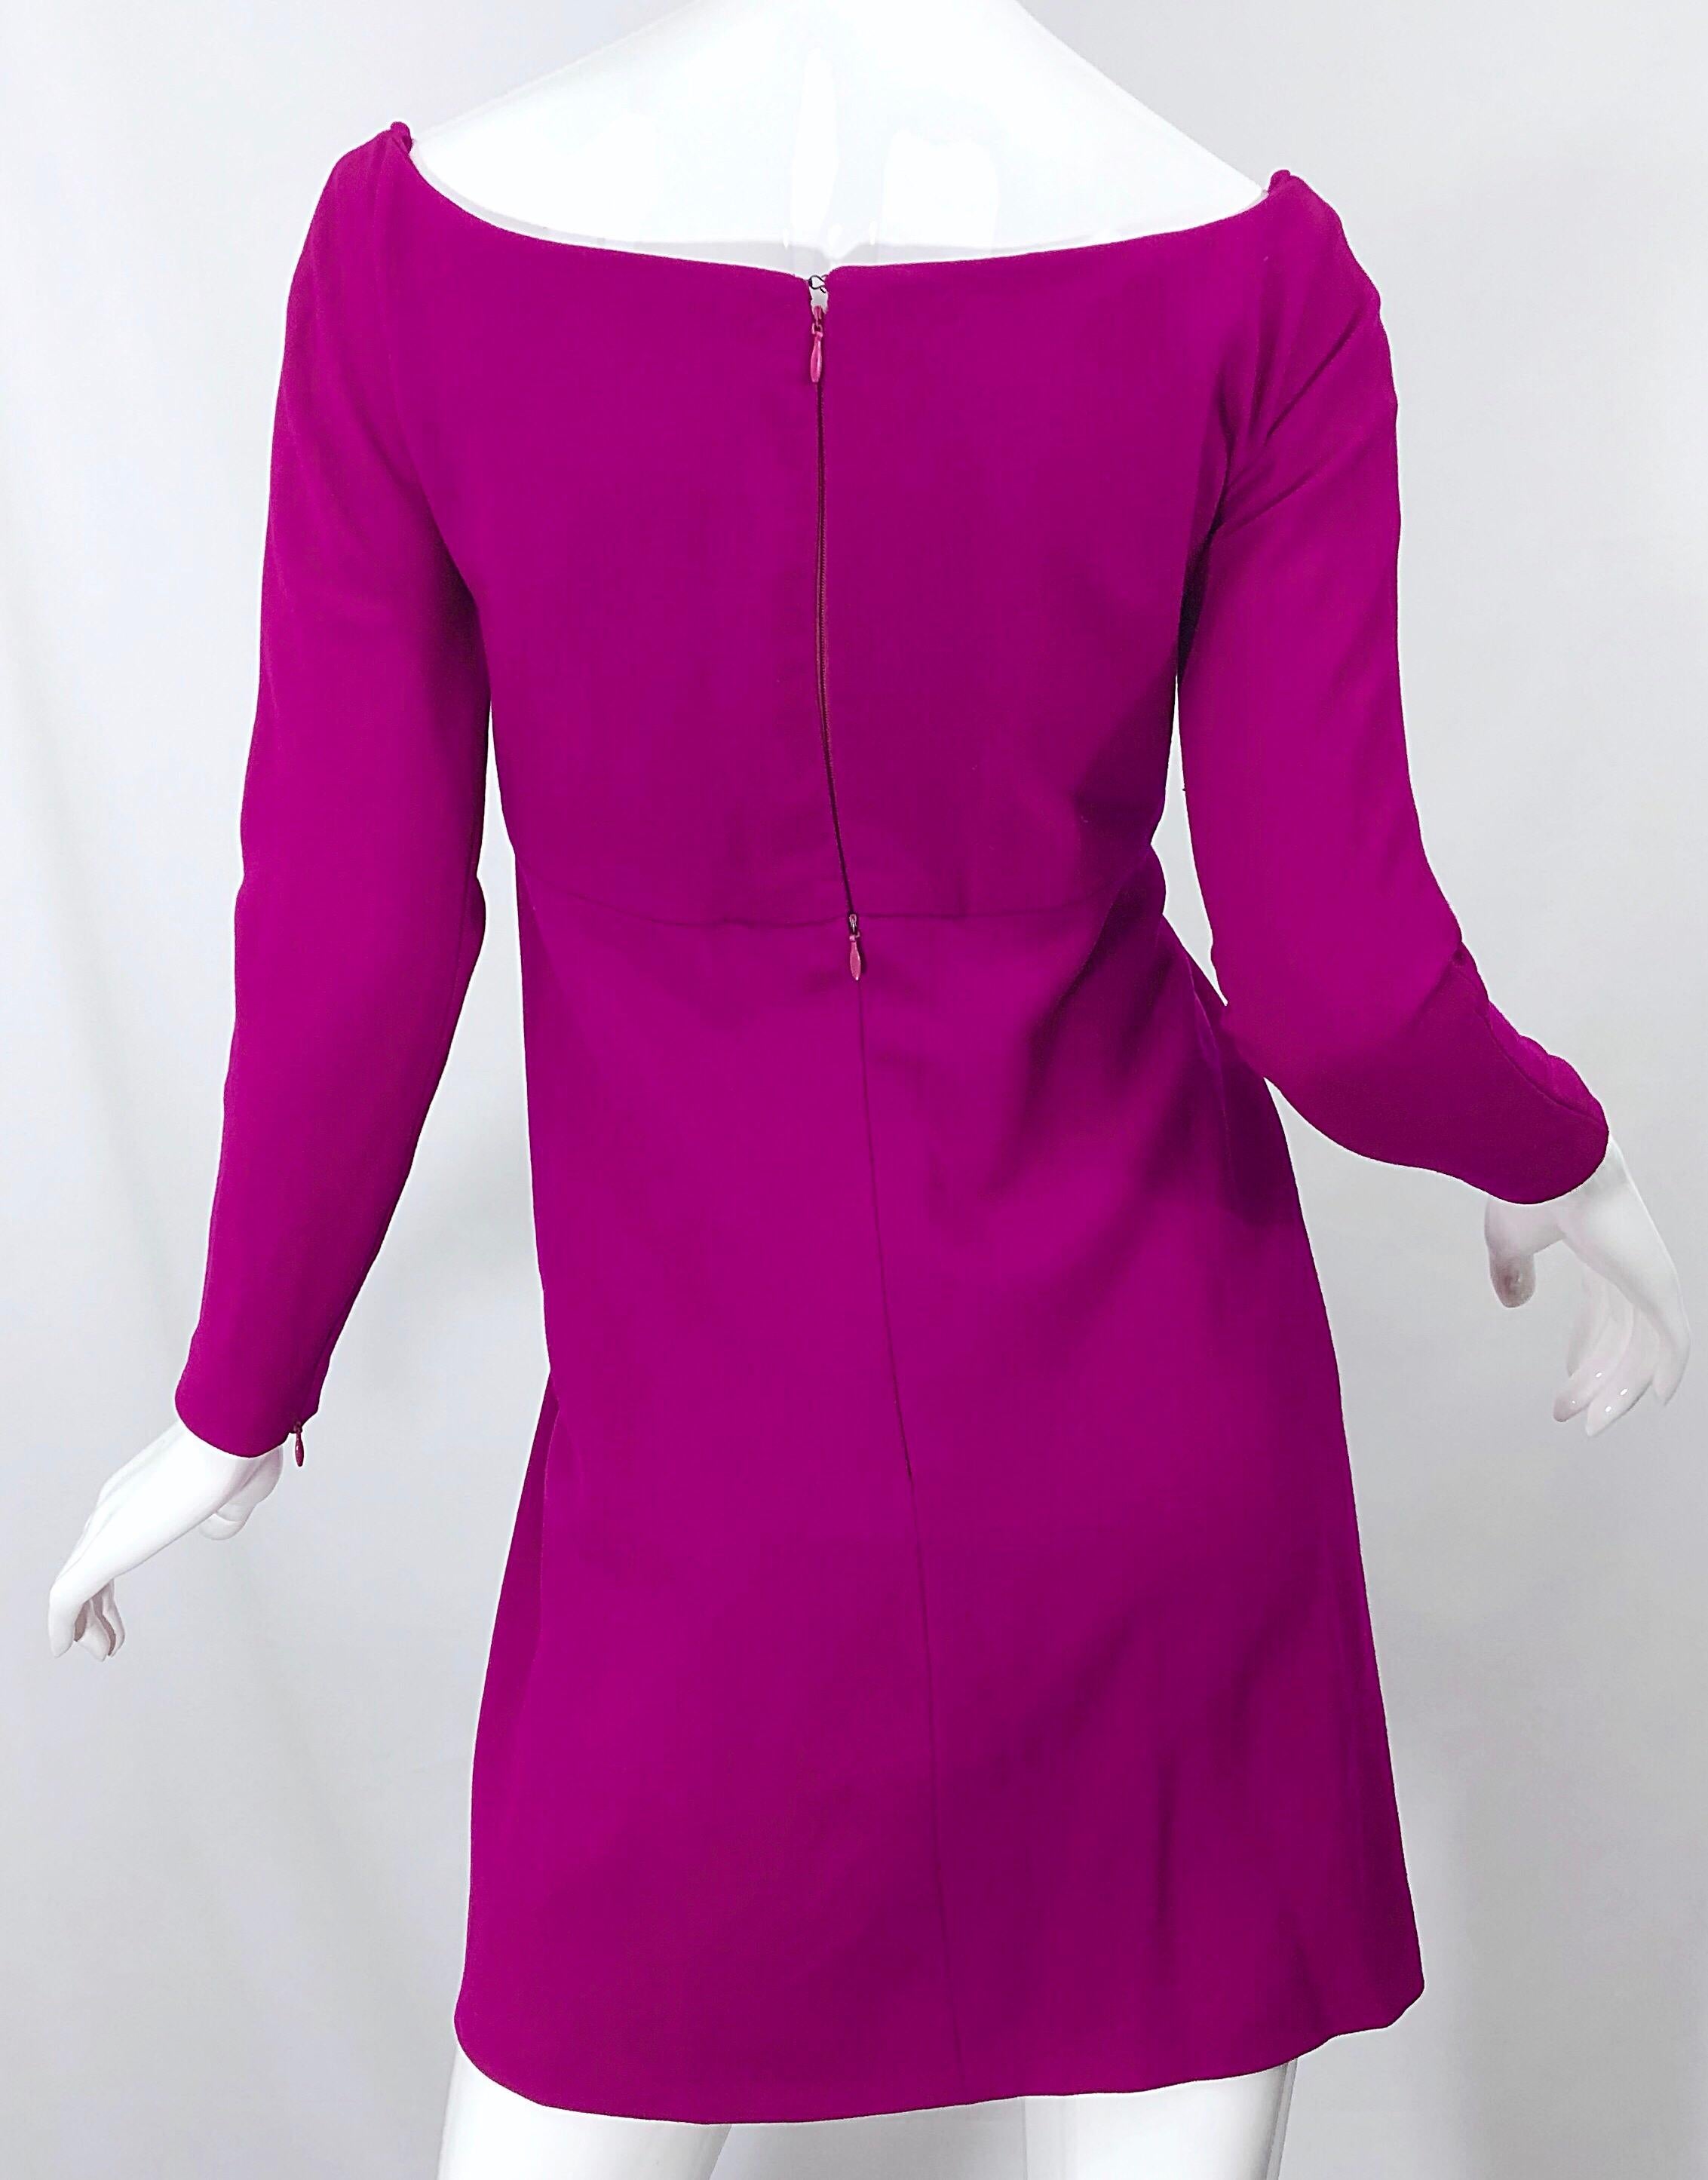 Carolyne Roehm 1990s Fuchsia Hot Pink Wool Vintage 90s Mini Empire Dress For Sale 6